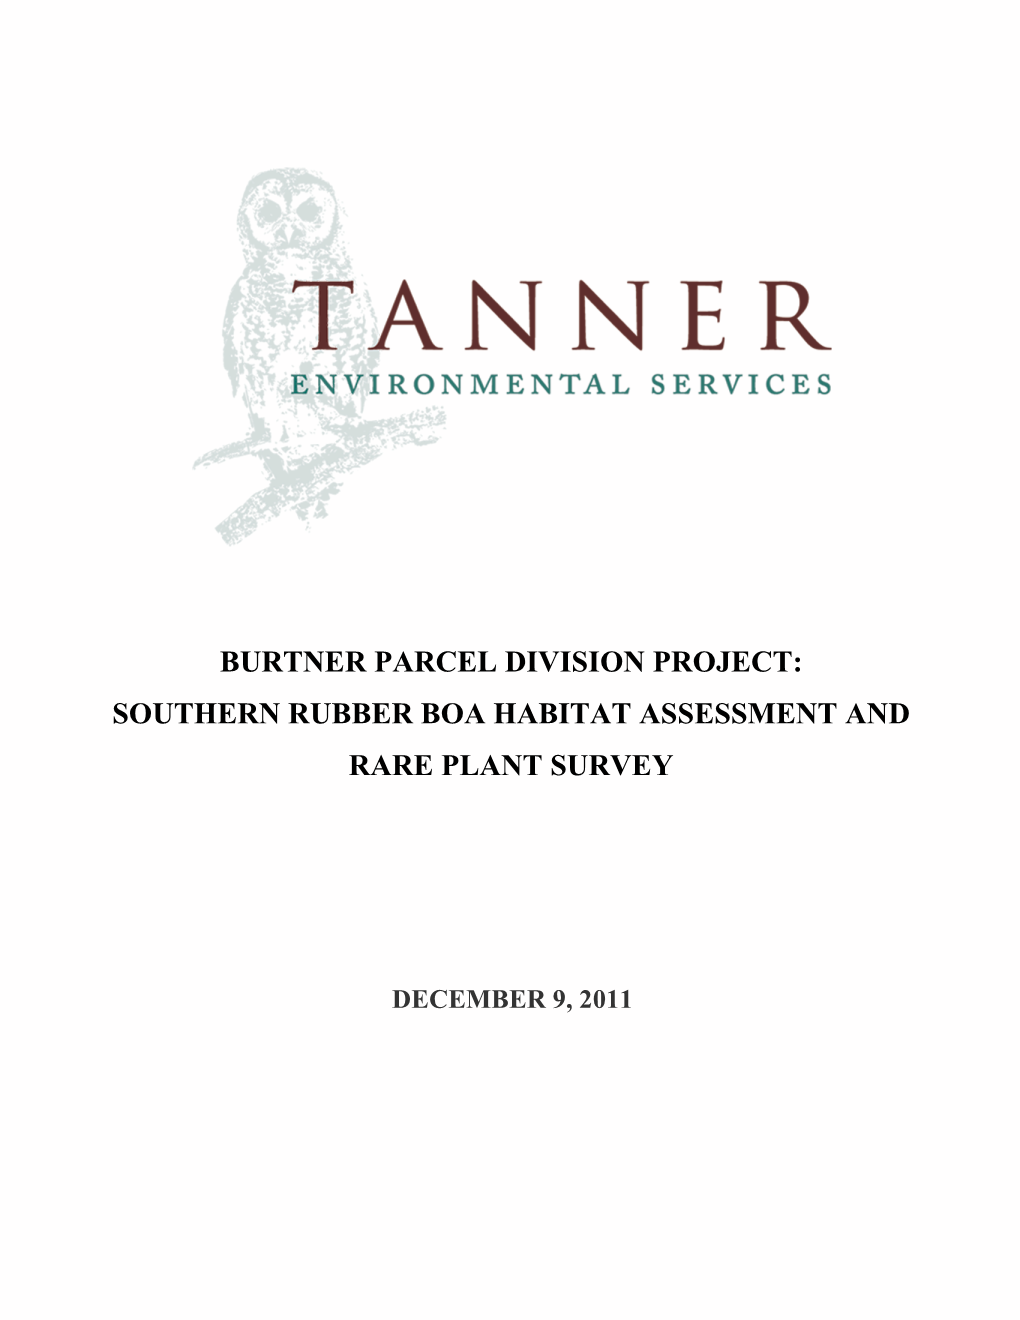 Burtner Parcel Division Project: Southern Rubber Boa Habitat Assessment and Rare Plant Survey